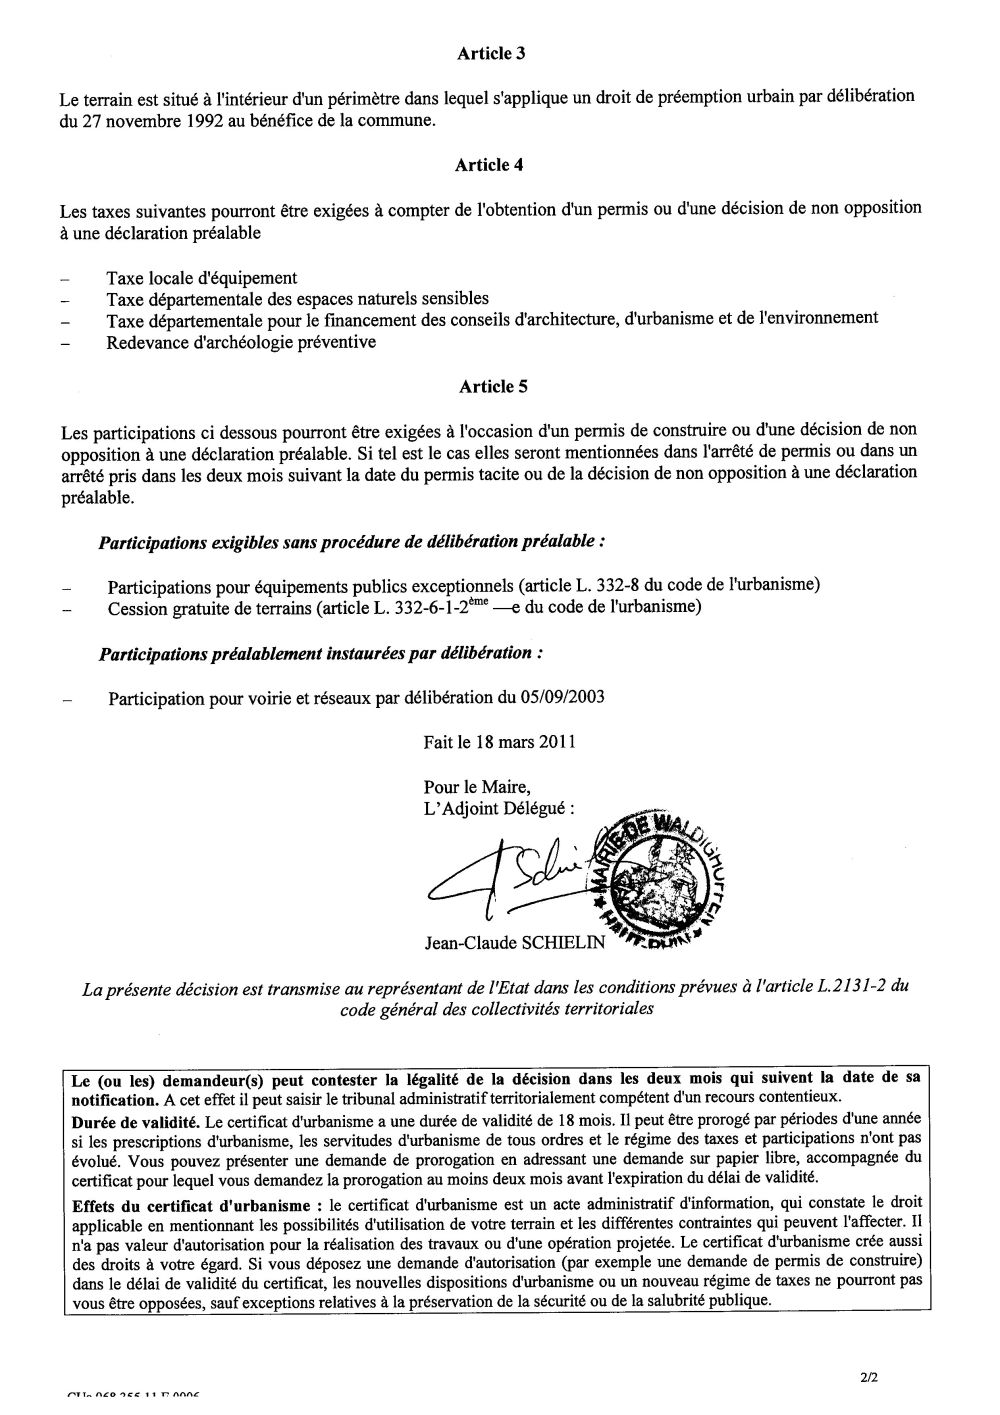 Certificat d'urbanisme n°11E0006 - Mme PEREZ